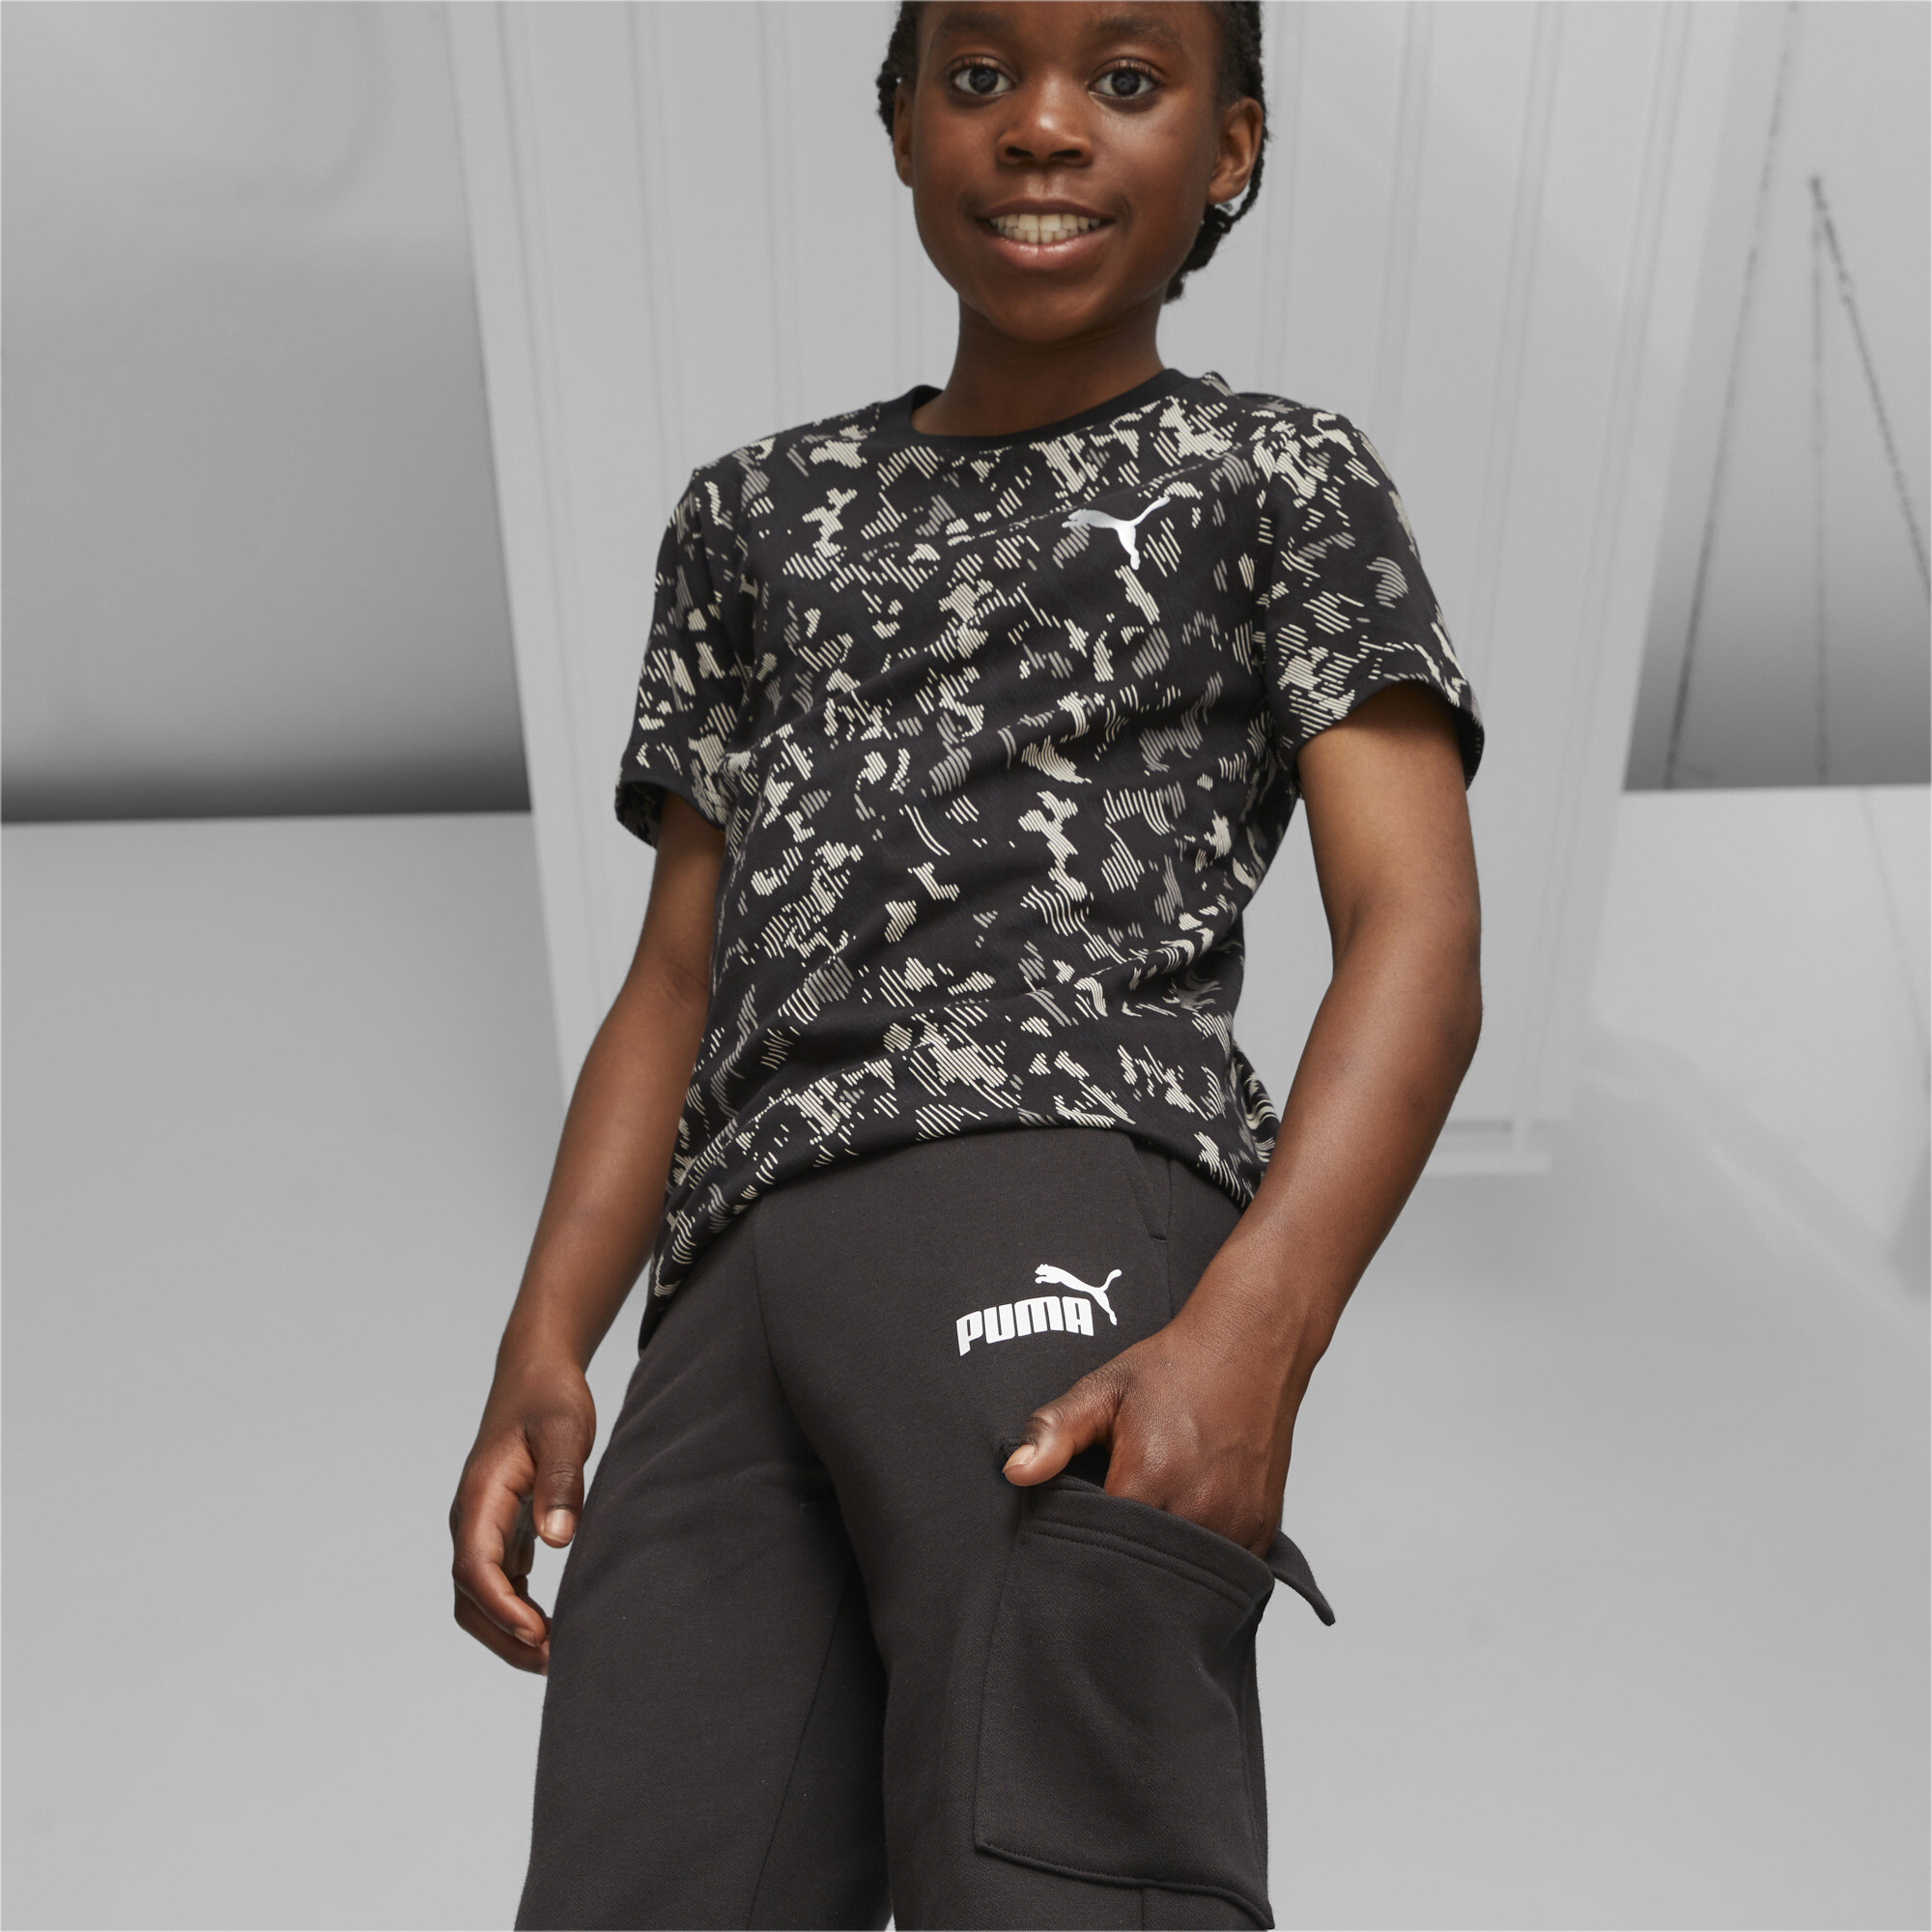 Men's Puma Essentials Youth Cargo Pants, Black, Size 3-4Y, Clothing